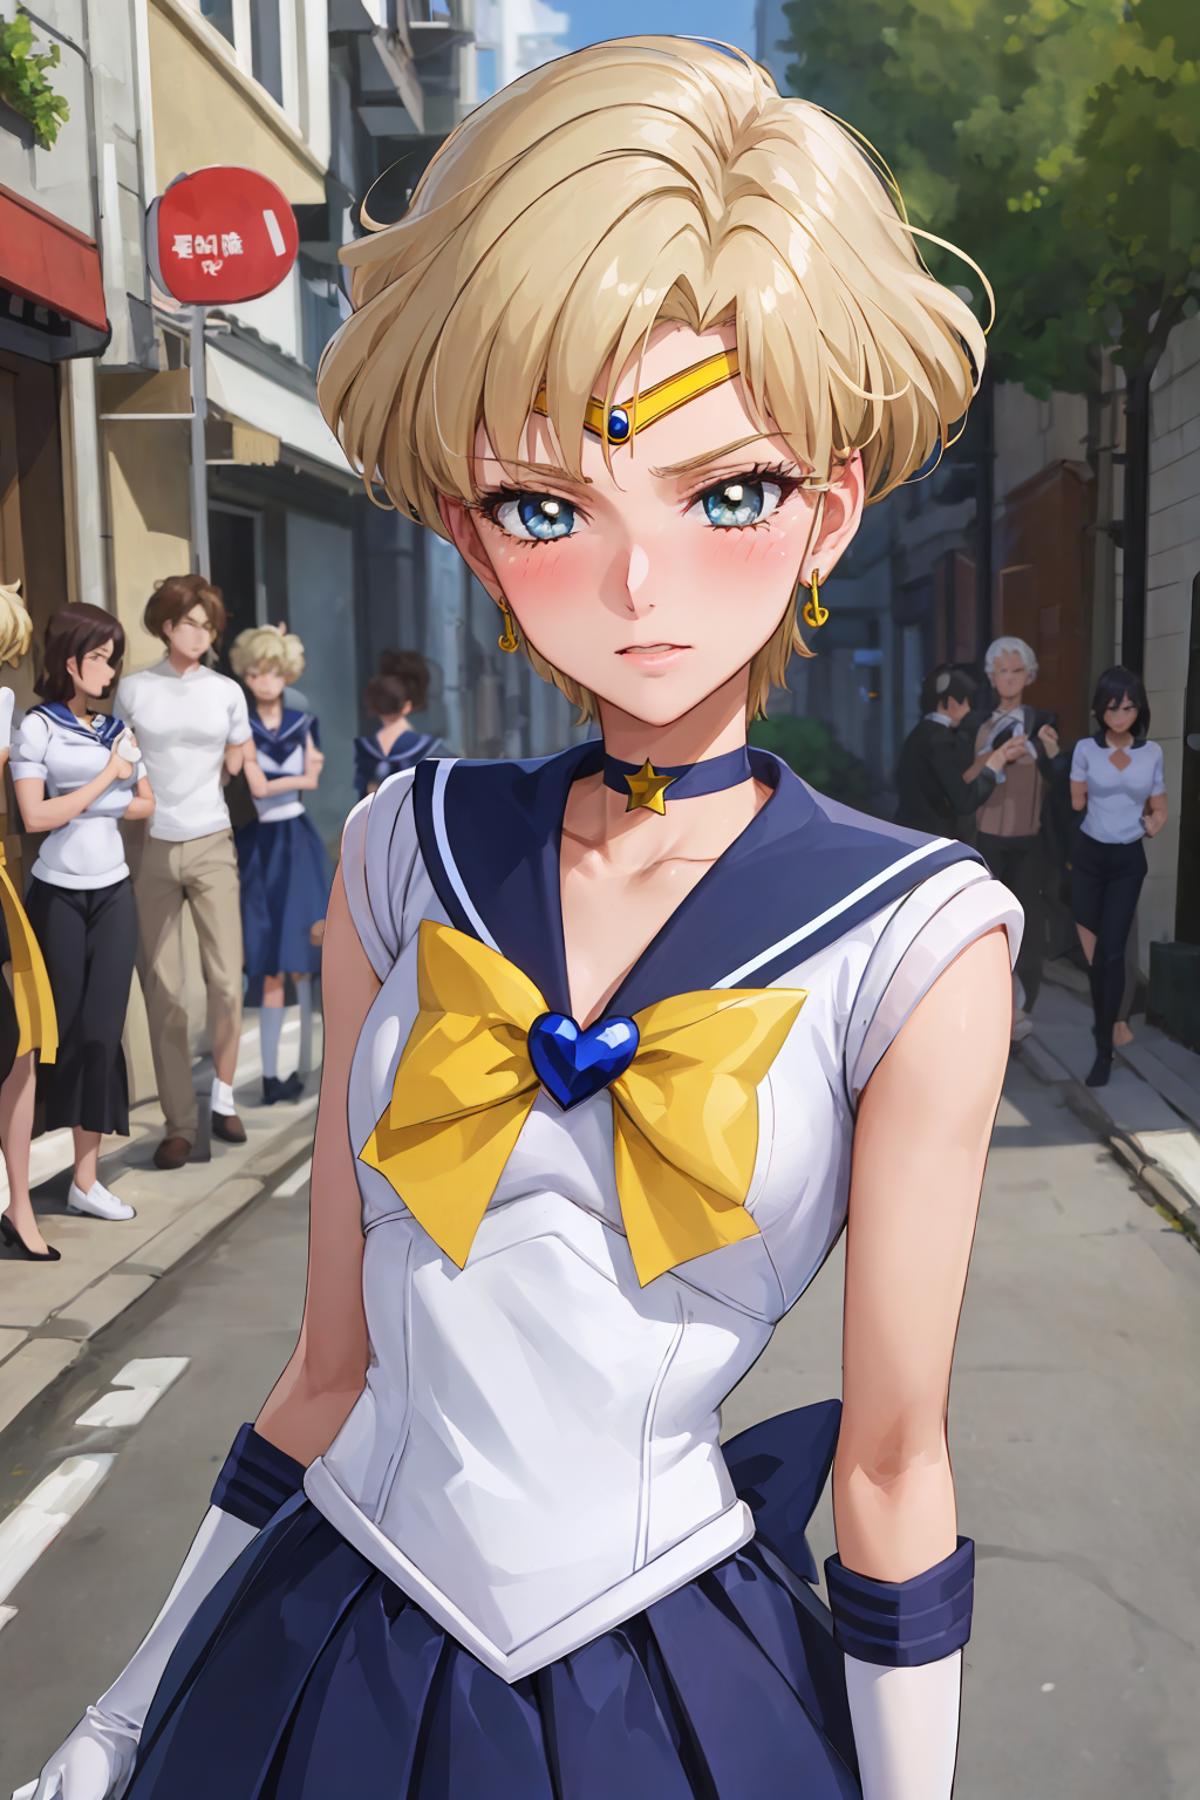 Kizuki - Sailor Moon - Sailor Uranus [NSFW Support] image by KizukiAi